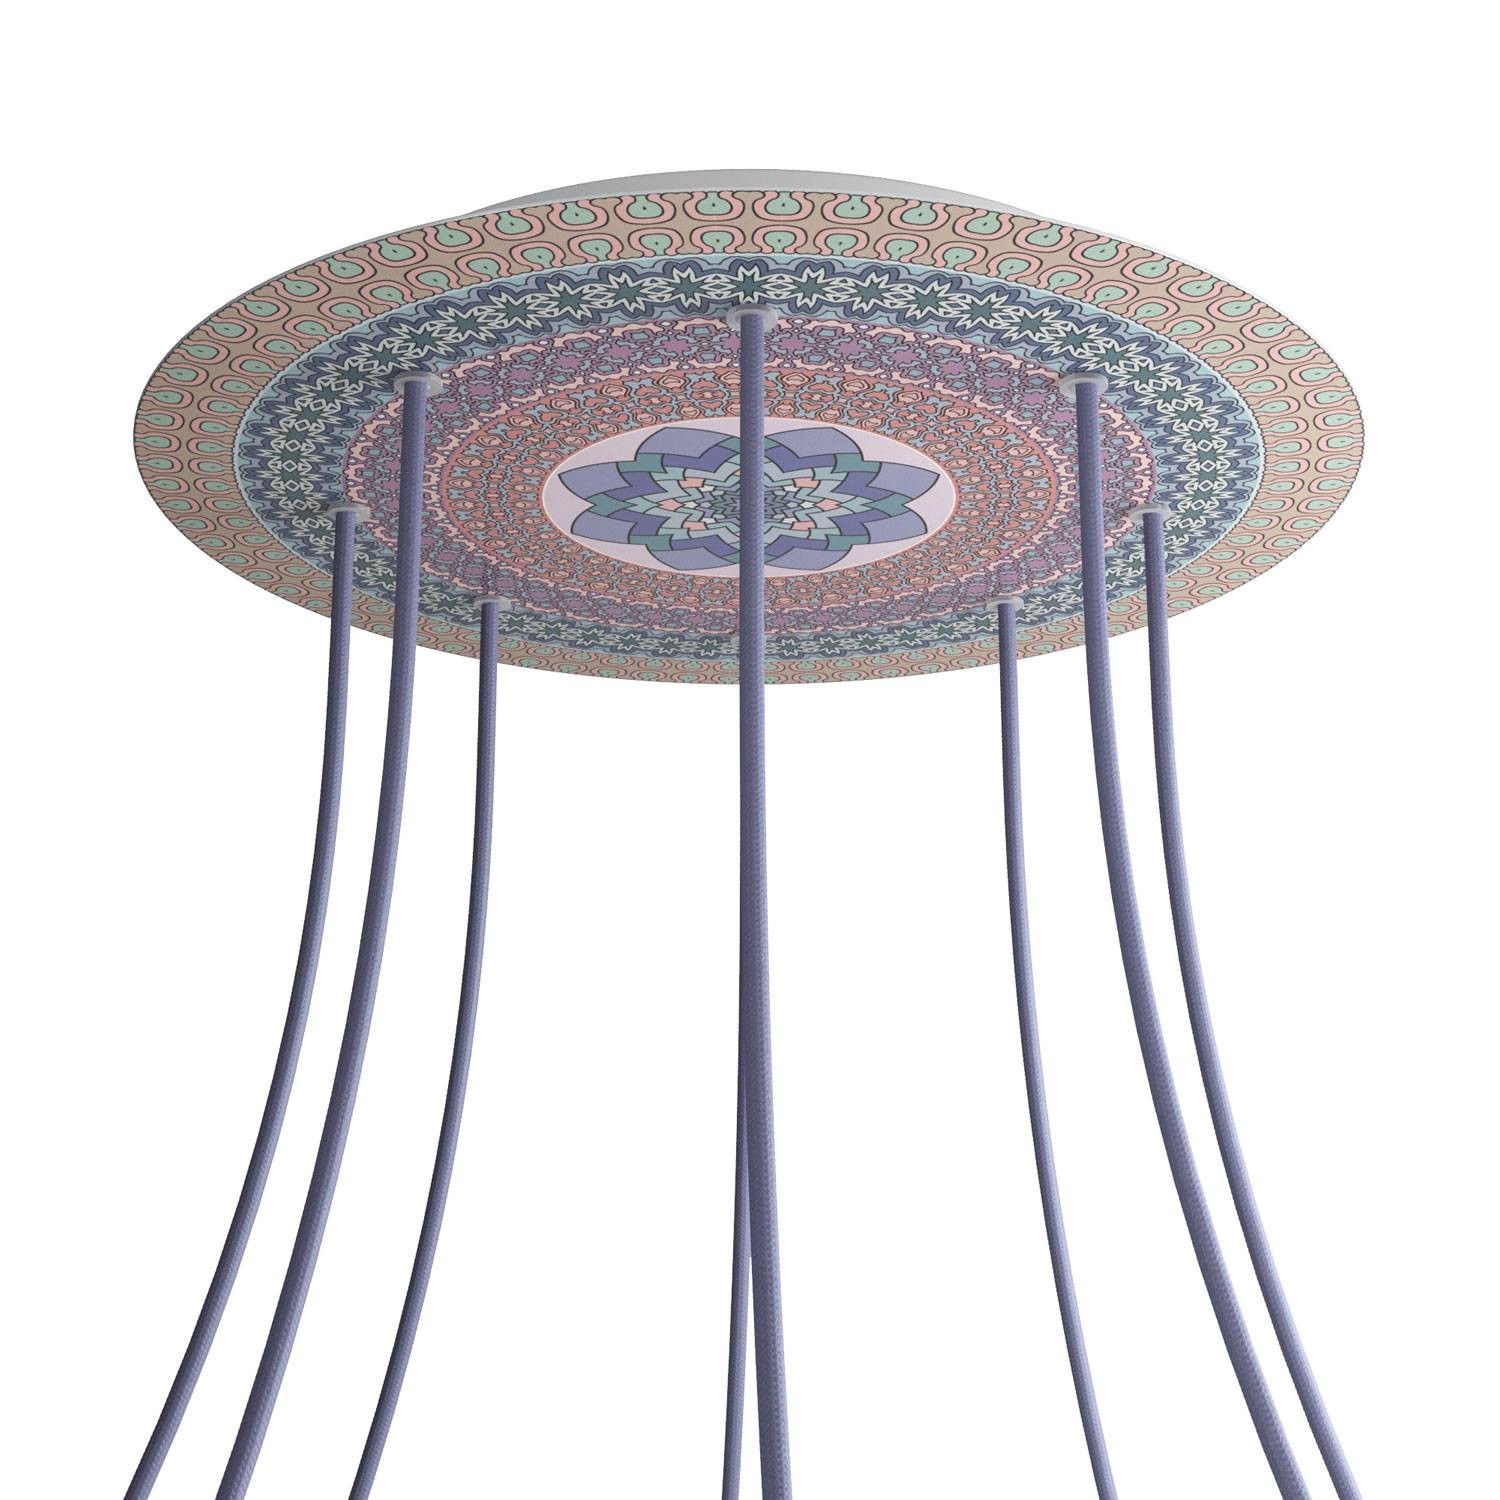 Velika okrugla dekoracija za stropnu rozetu 400 mm - Rose-One sistem s 8 rupa i 4 bočne rupe - PROMO